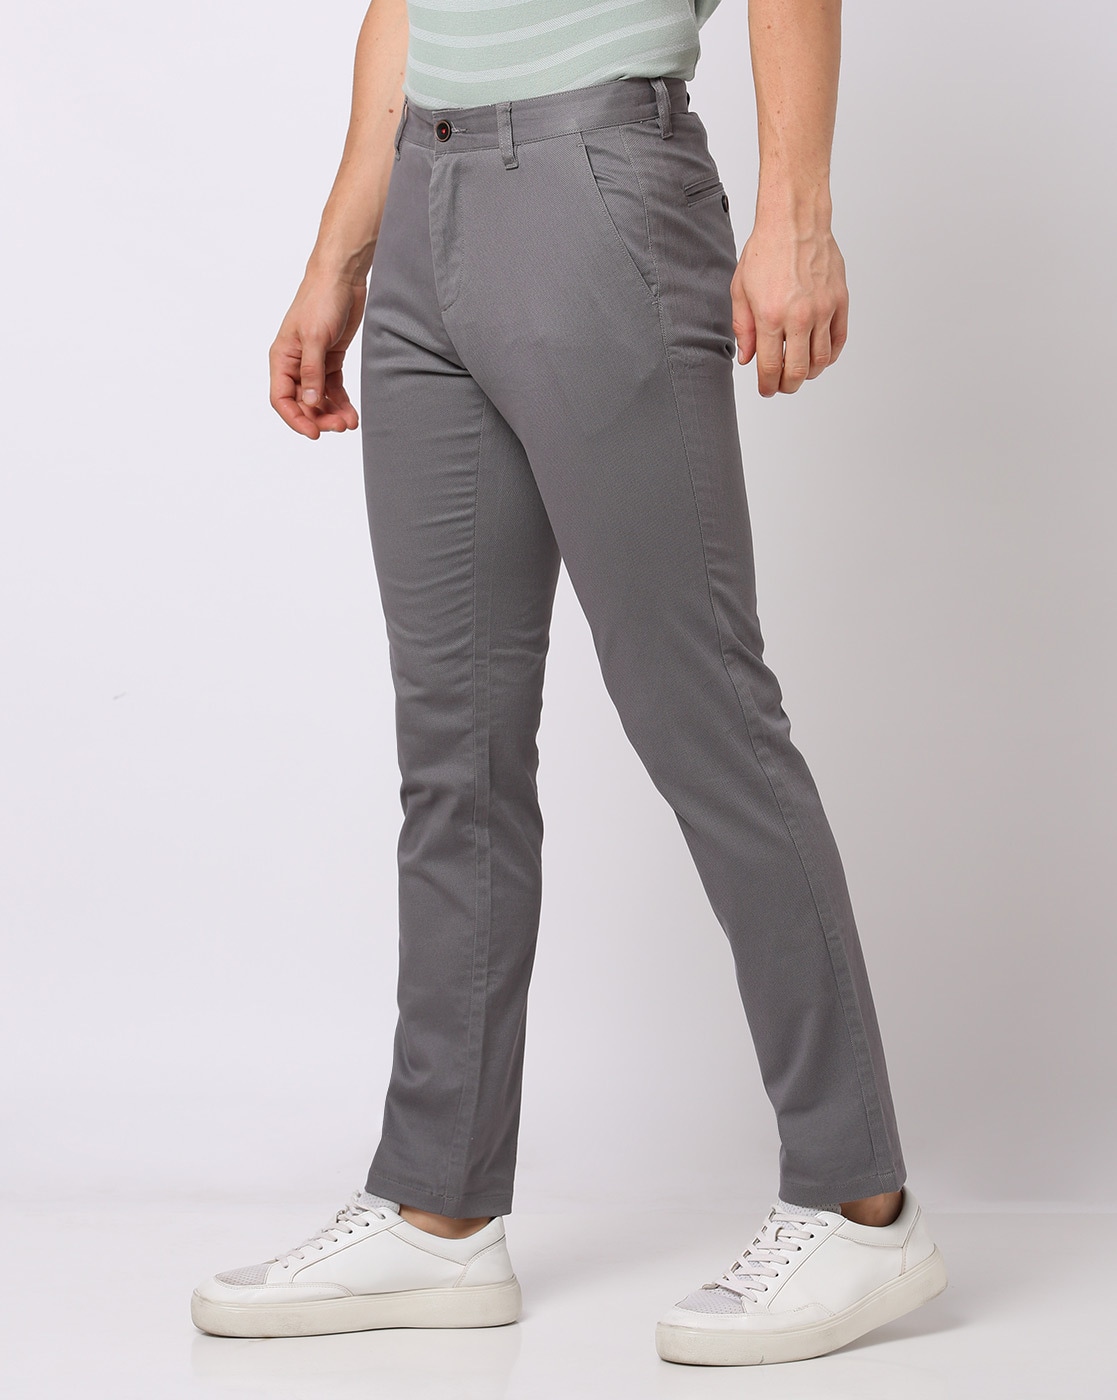 Buy Men Grey Regular Fit Trouser Online in India - Monte Carlo